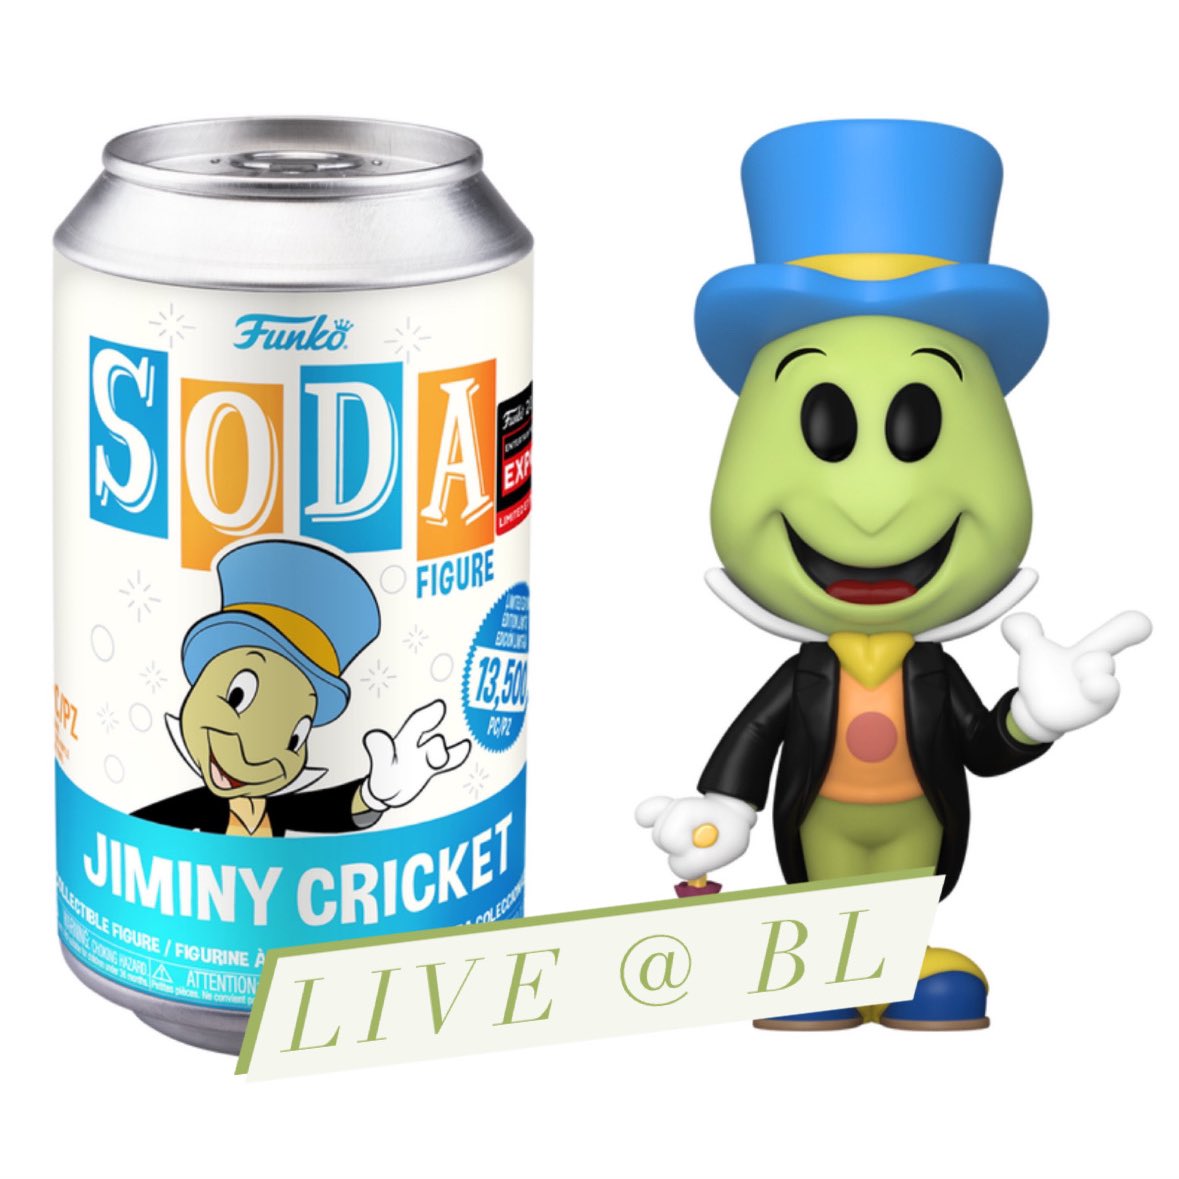 C2E2 exclusive Jiminy Cricket Funko Soda! Is live at Box Lunch ~ also 20% off! Sold out on the F Shop ~
Linky ~ fnkpp.com/BLJim
#Ad #C2E2 #FPN #FunkoPOPNews #Funko #POP #POPVinyl #FunkoPOP #FunkoSoda